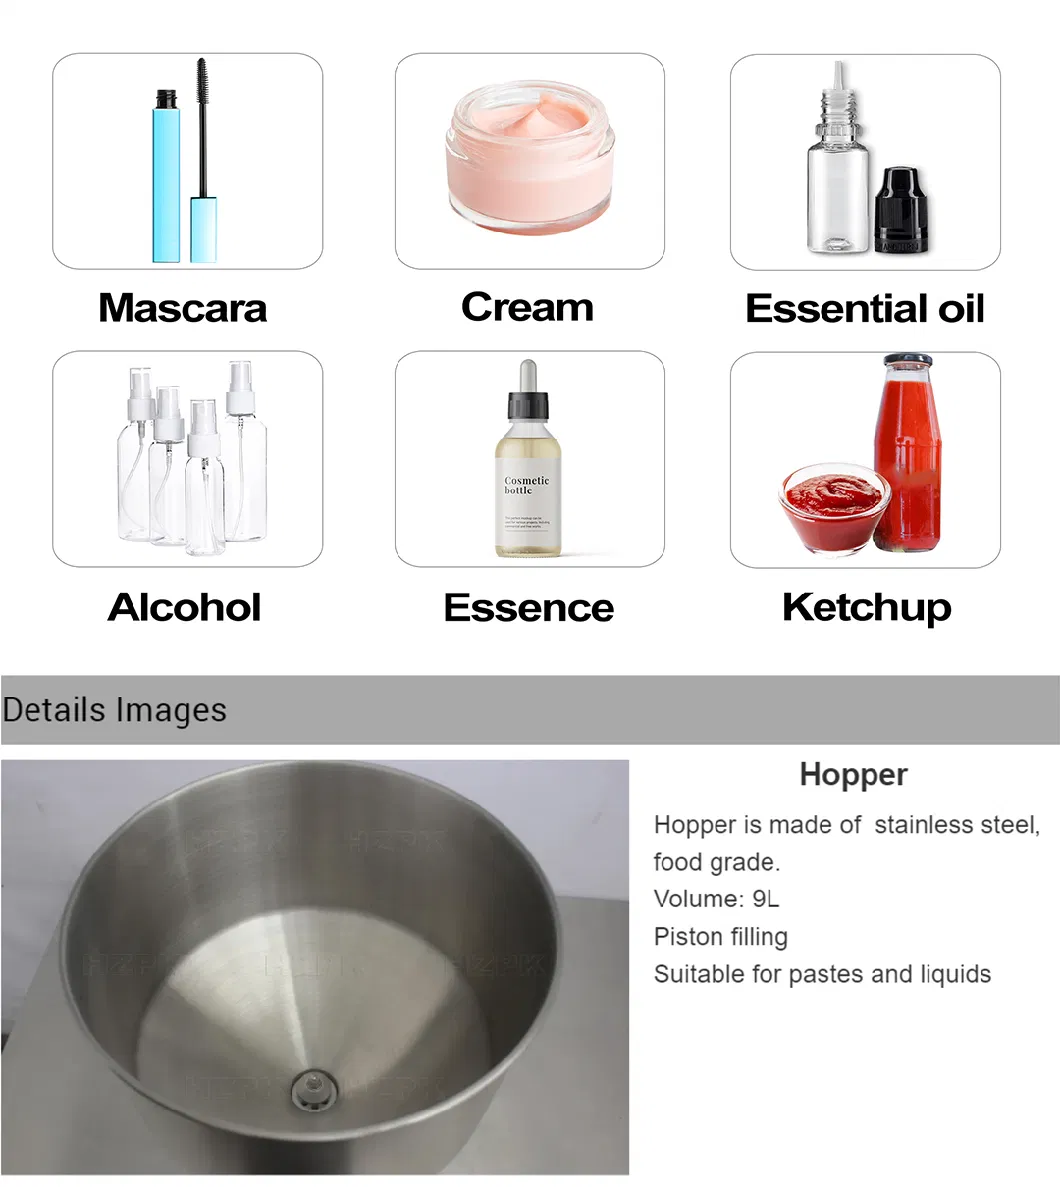 Hzpk A03 Hand Pressure Essential Oil Bottle Cosmetic Face Cream Jar Paste Liquid Filling Machine 5-50ml for Small Business